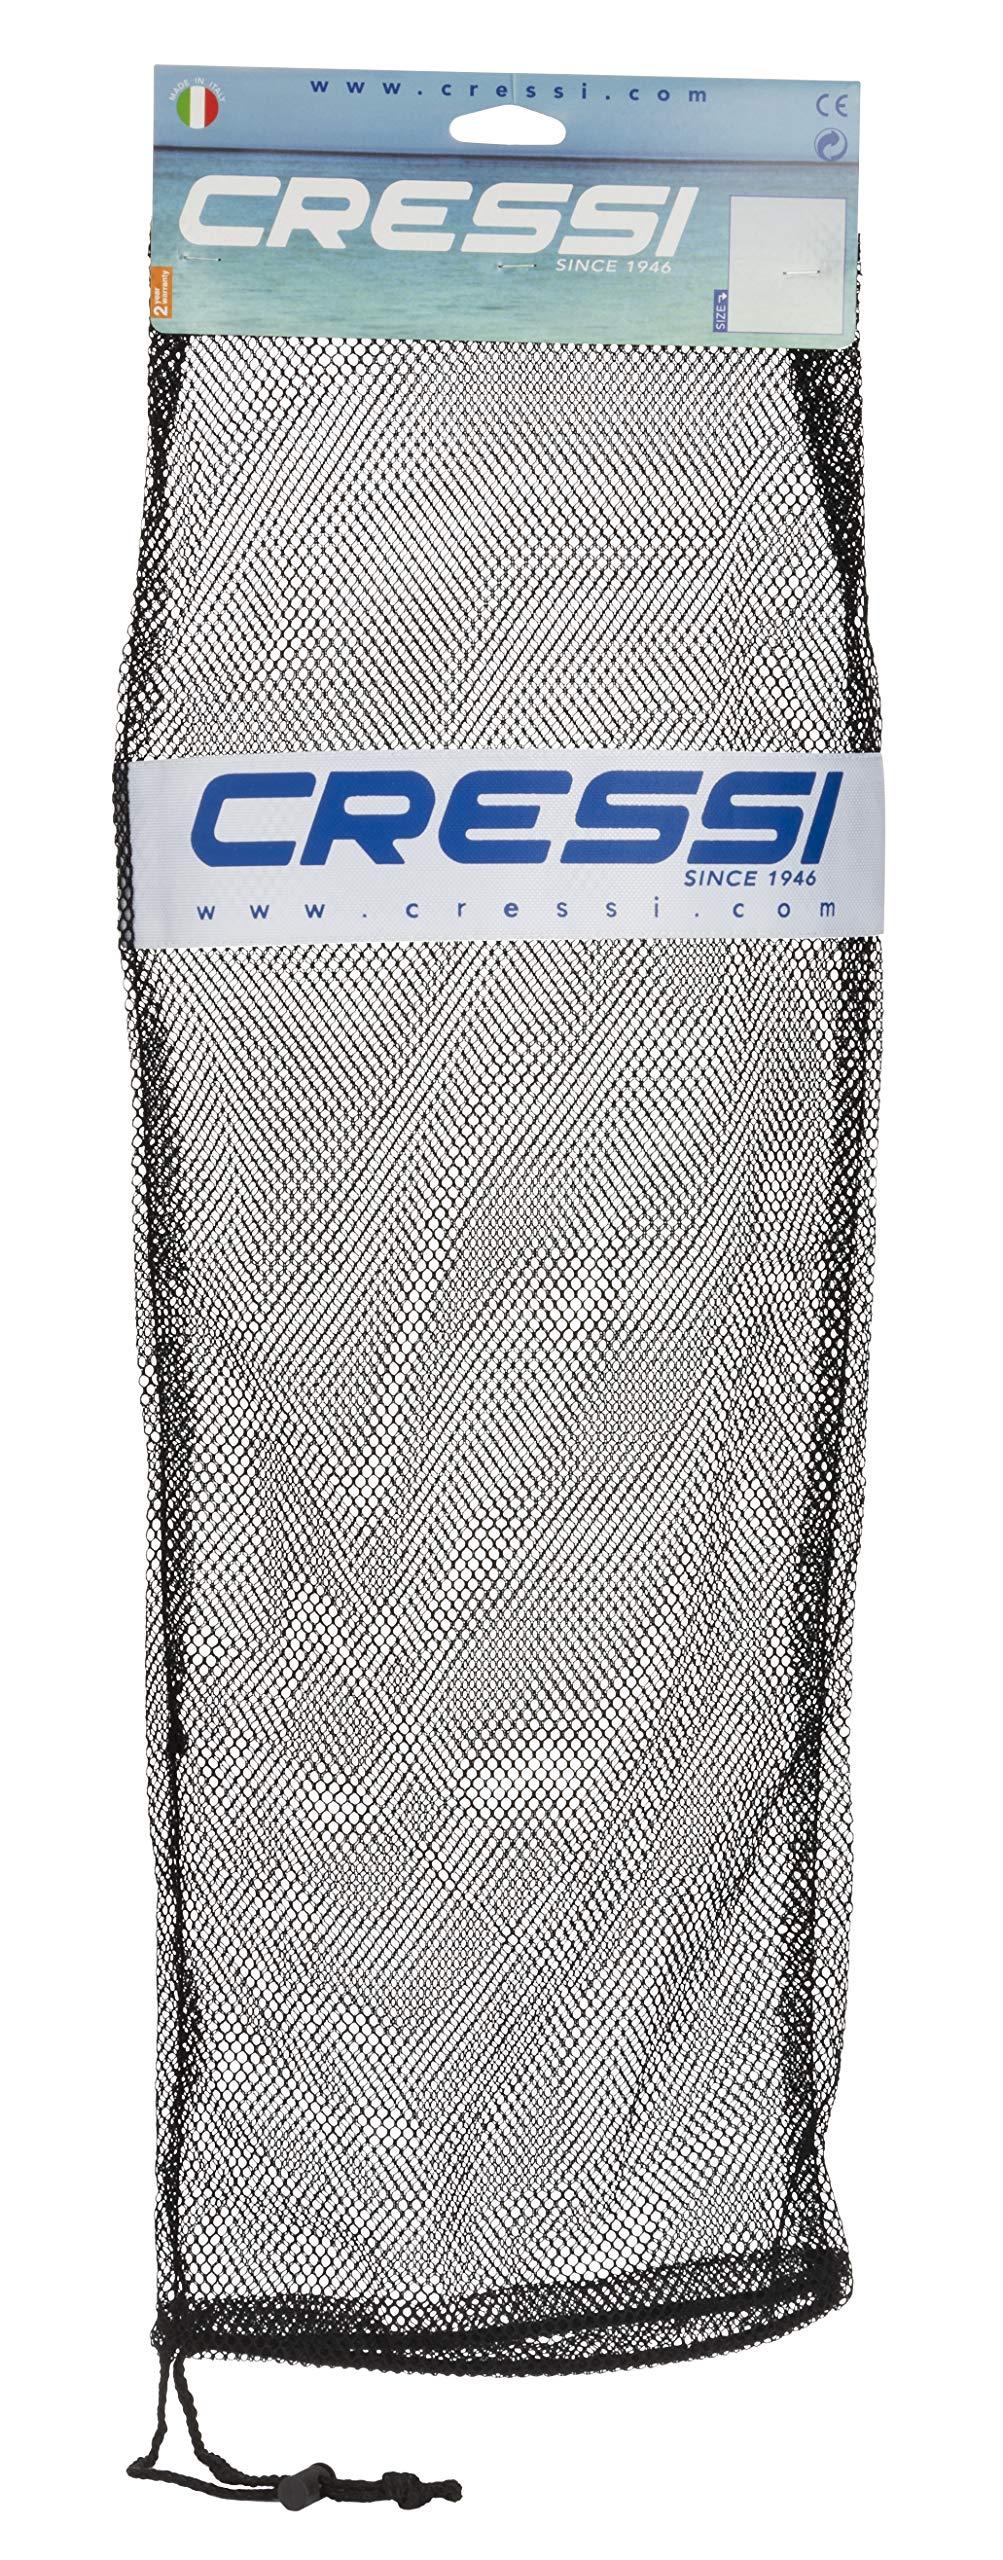 [AUSTRALIA] - Cressi Net Bag for Snorkeling, Scuba Freediving Sets - Mask, Snorkel, Fins Equipment Mesh Bag, Black, 29.5 x 10.6 in, 75 x 27.5 cm (BZ175003) 